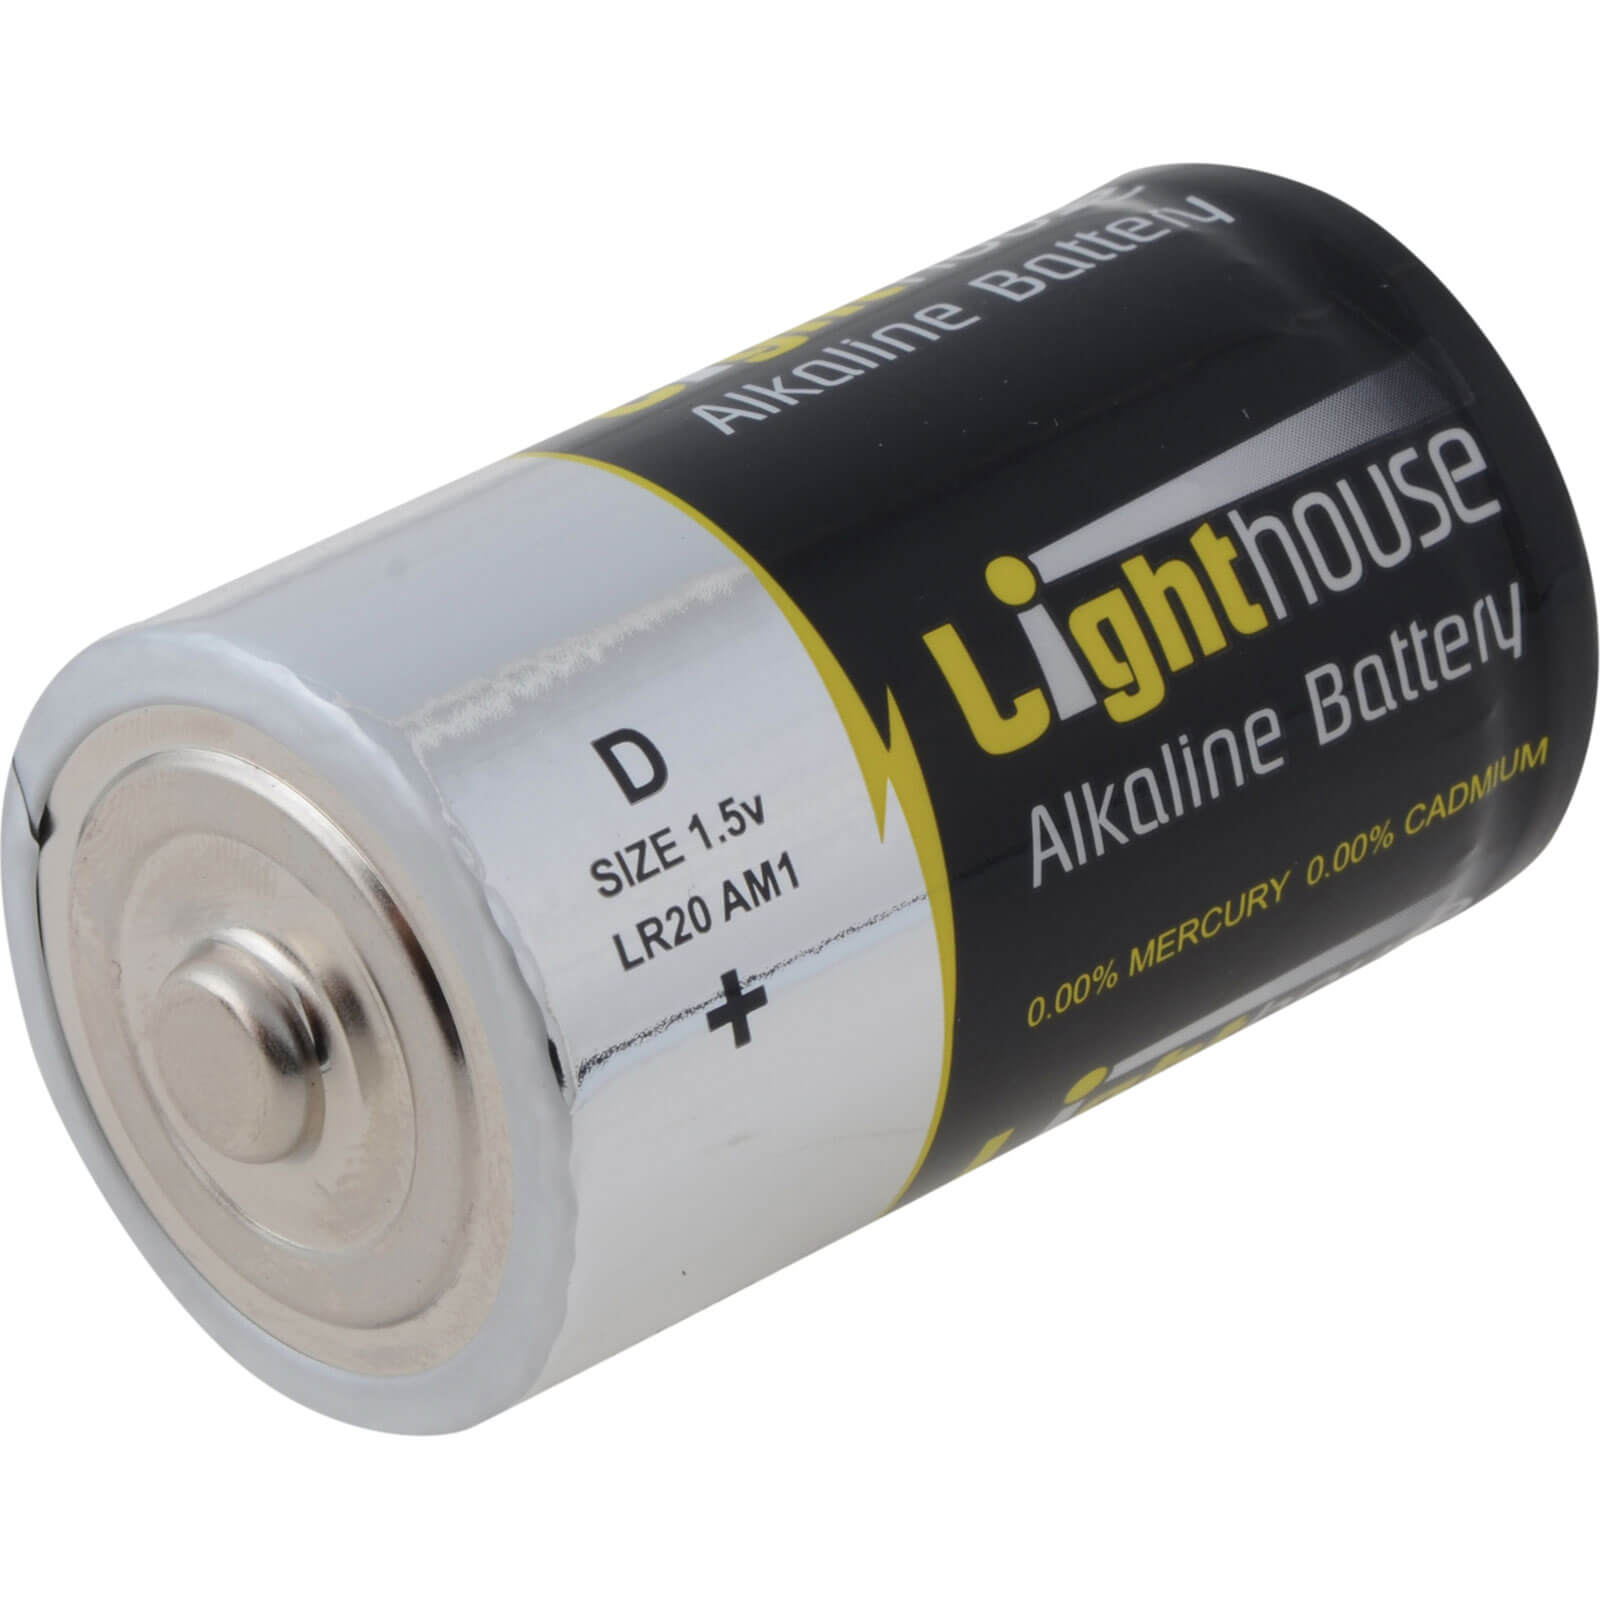 Image of Lighthouse LR20 Extra Long Life D Alkaline Batteries Pack of 2